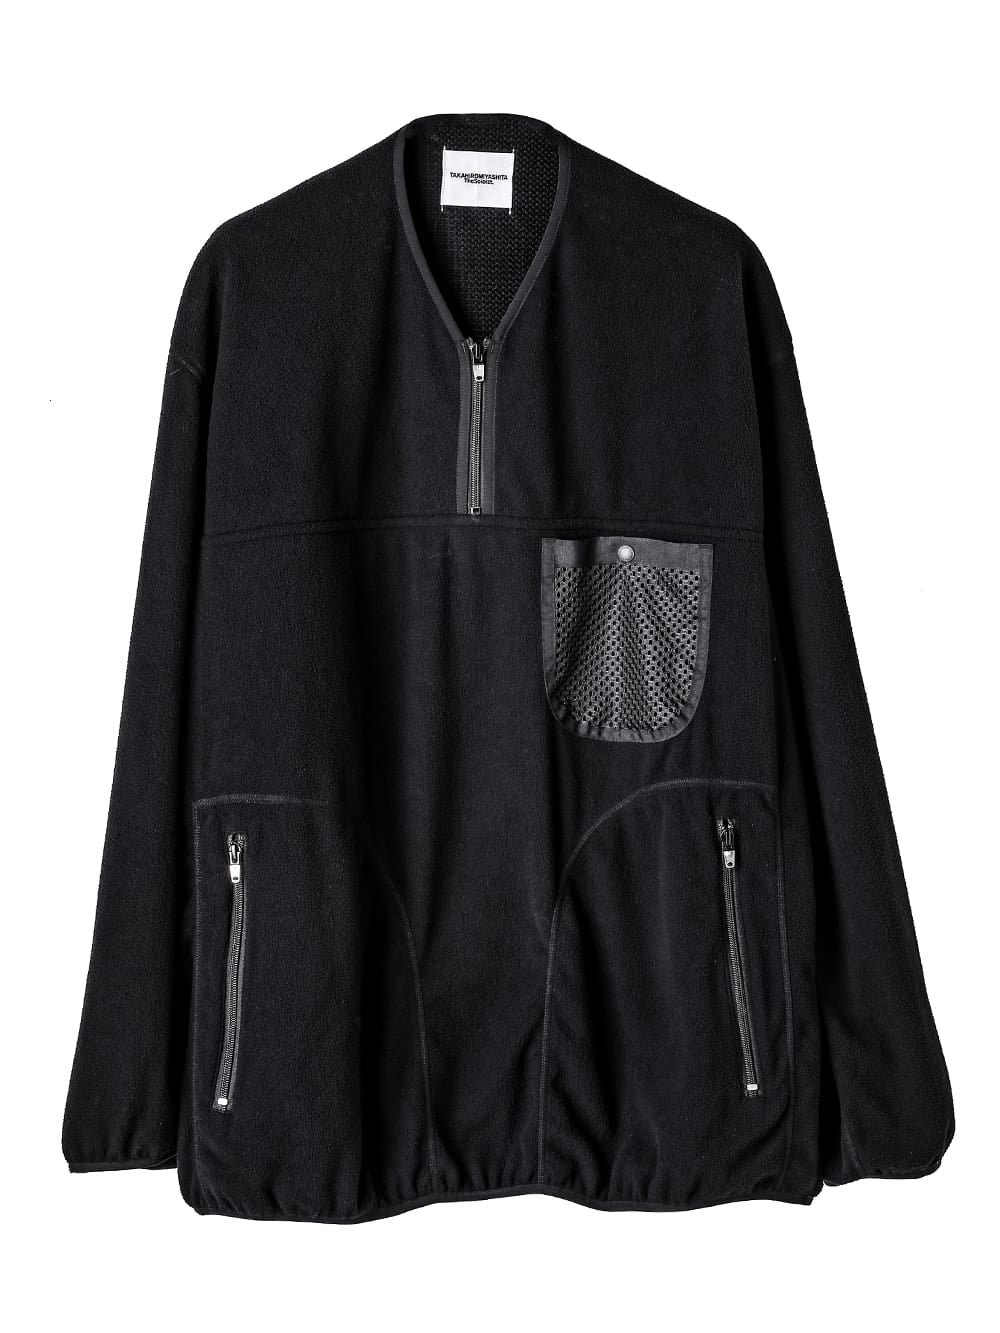 back gusset sleeve half zip fleece jacket.(solid)